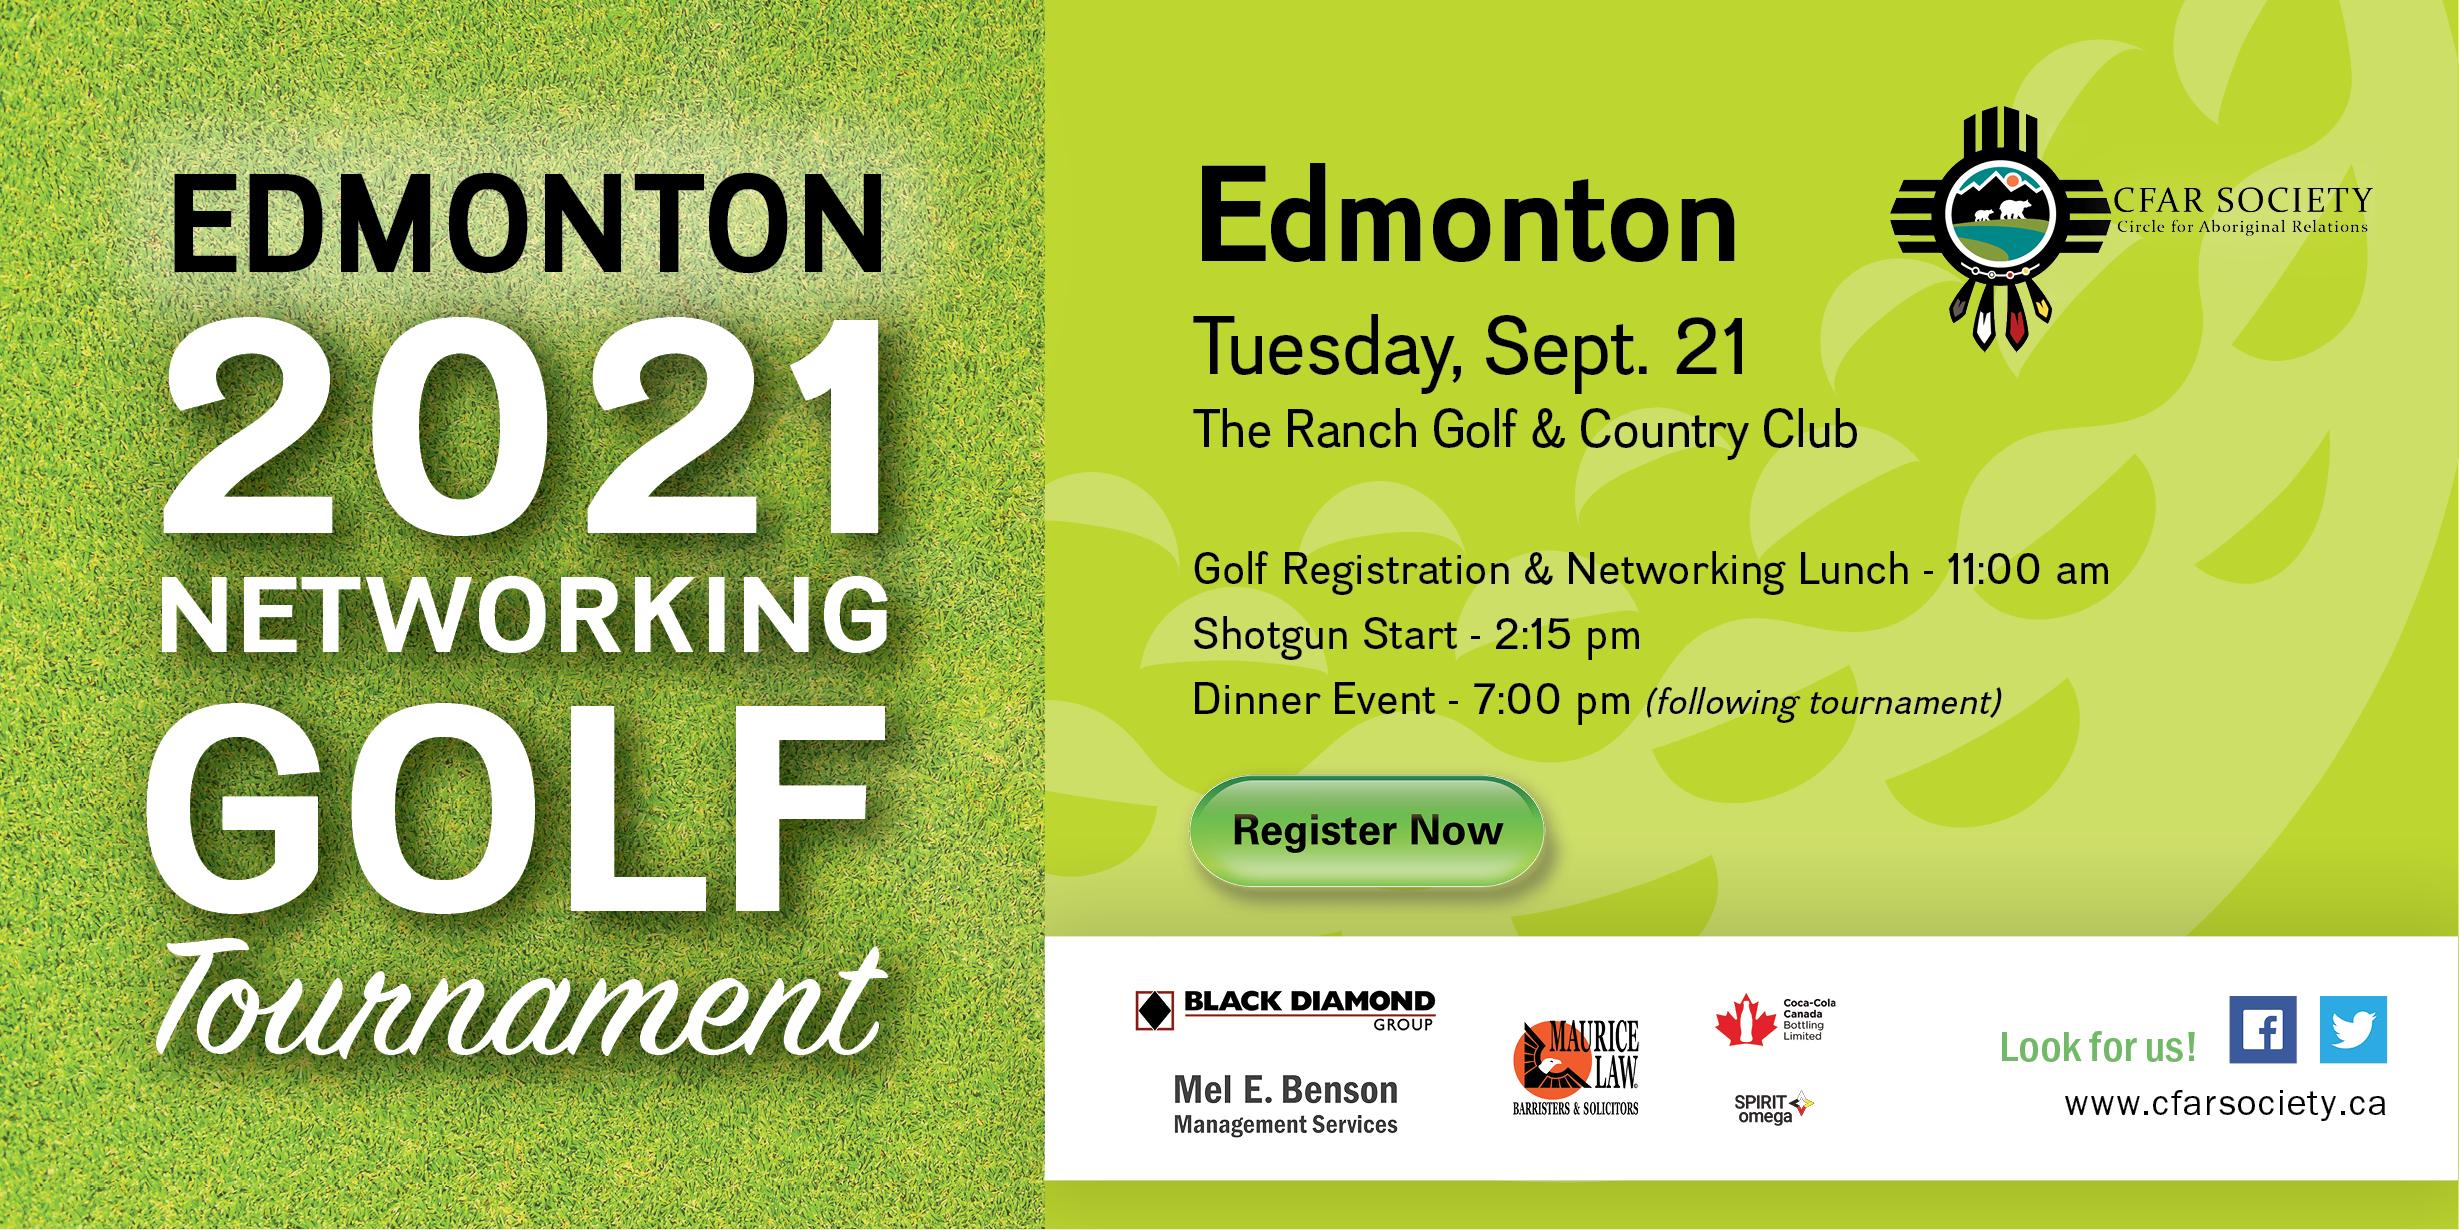 CFAR Society's 2021 Networking Golf Tournament - EDMONTON